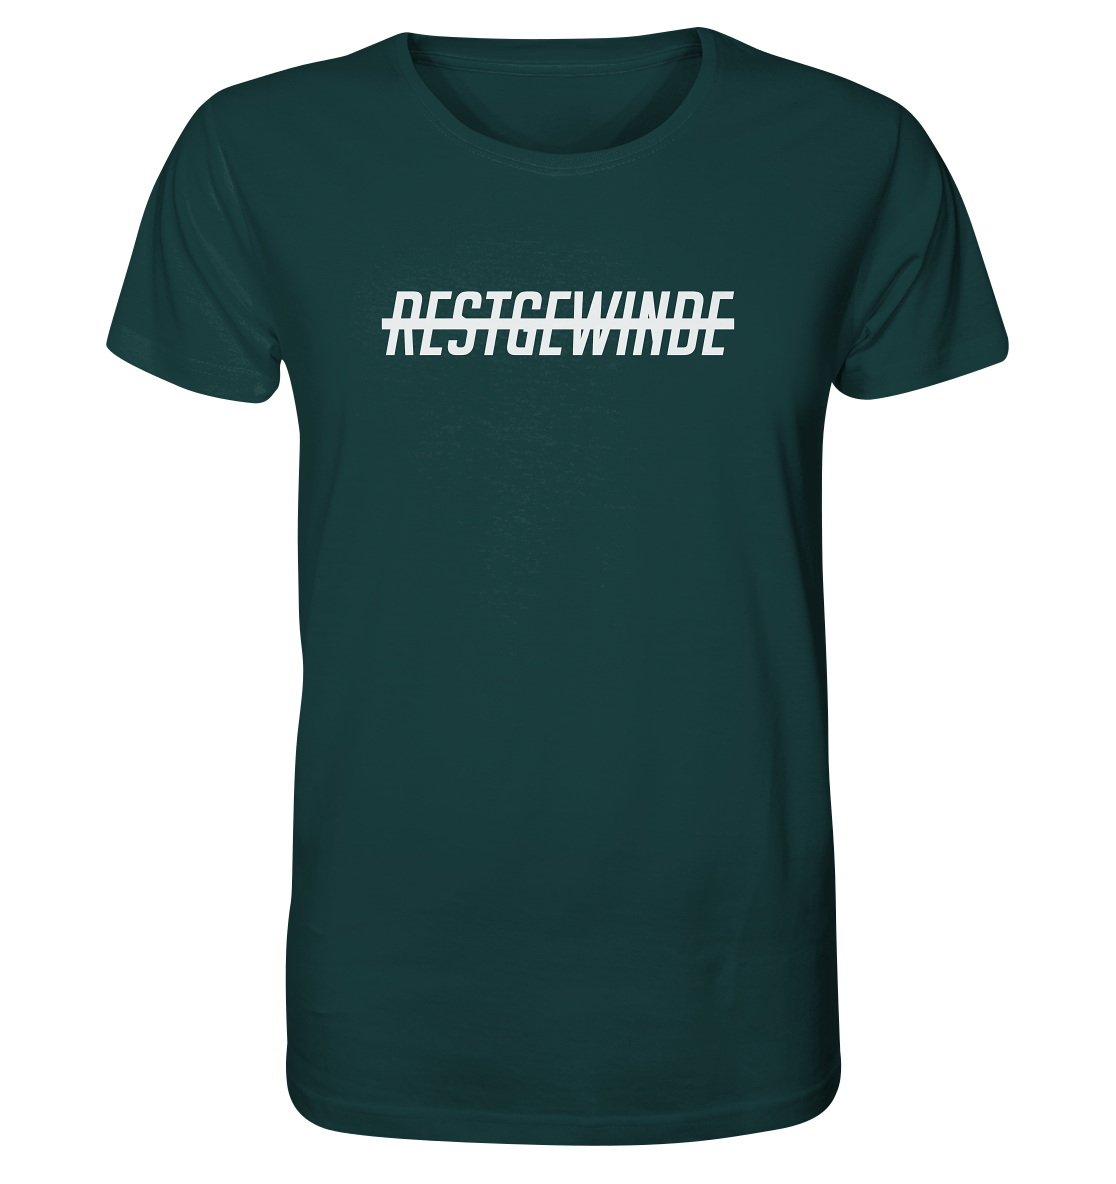 cod_AllgRestgewinde - Organic Shirt